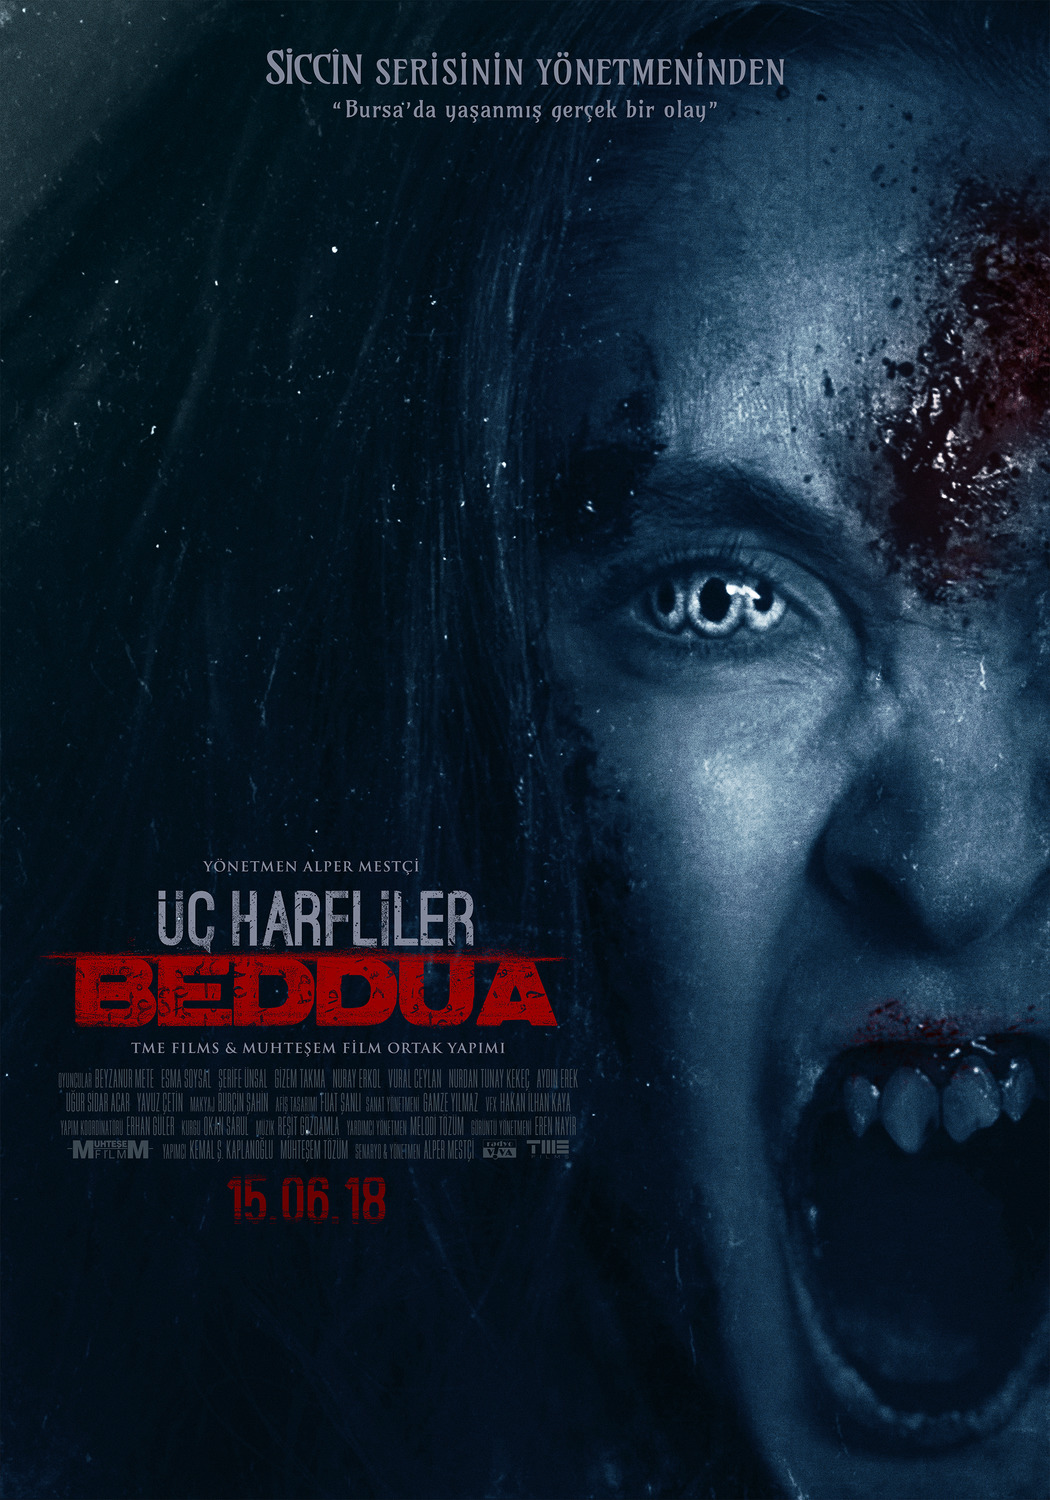 Extra Large Movie Poster Image for Üç Harfliler: Beddua (#1 of 2)